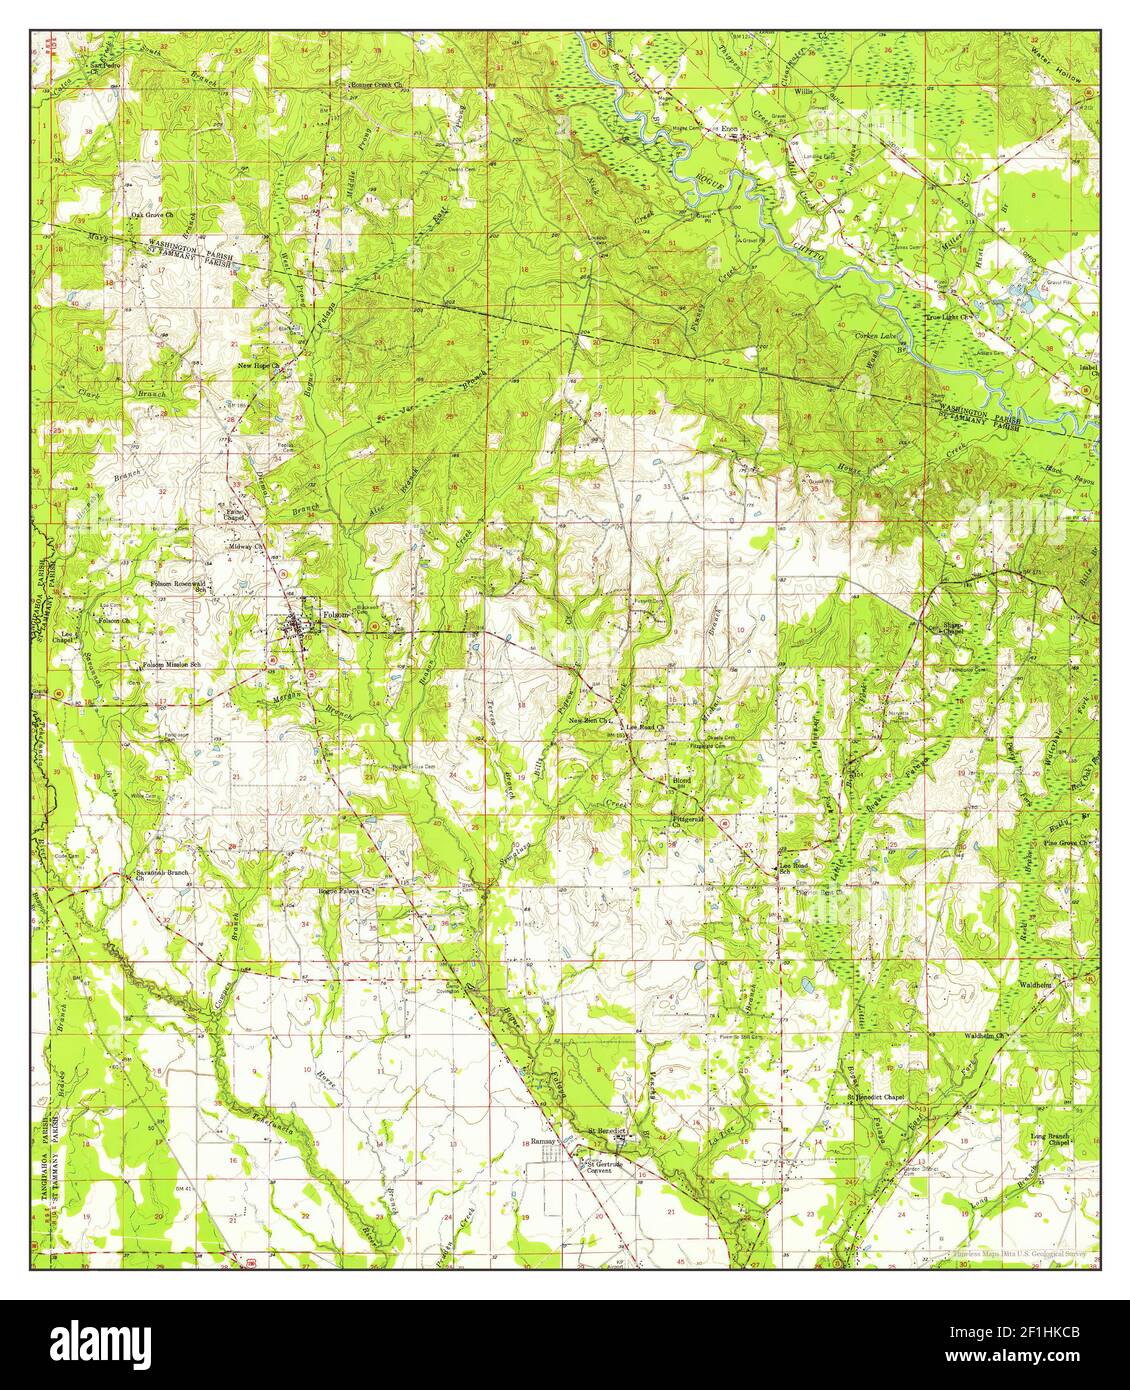 Folsom Louisiana Map 1958 162500 United States Of America By Timeless Maps Data Us Geological Survey 2F1HKCB 